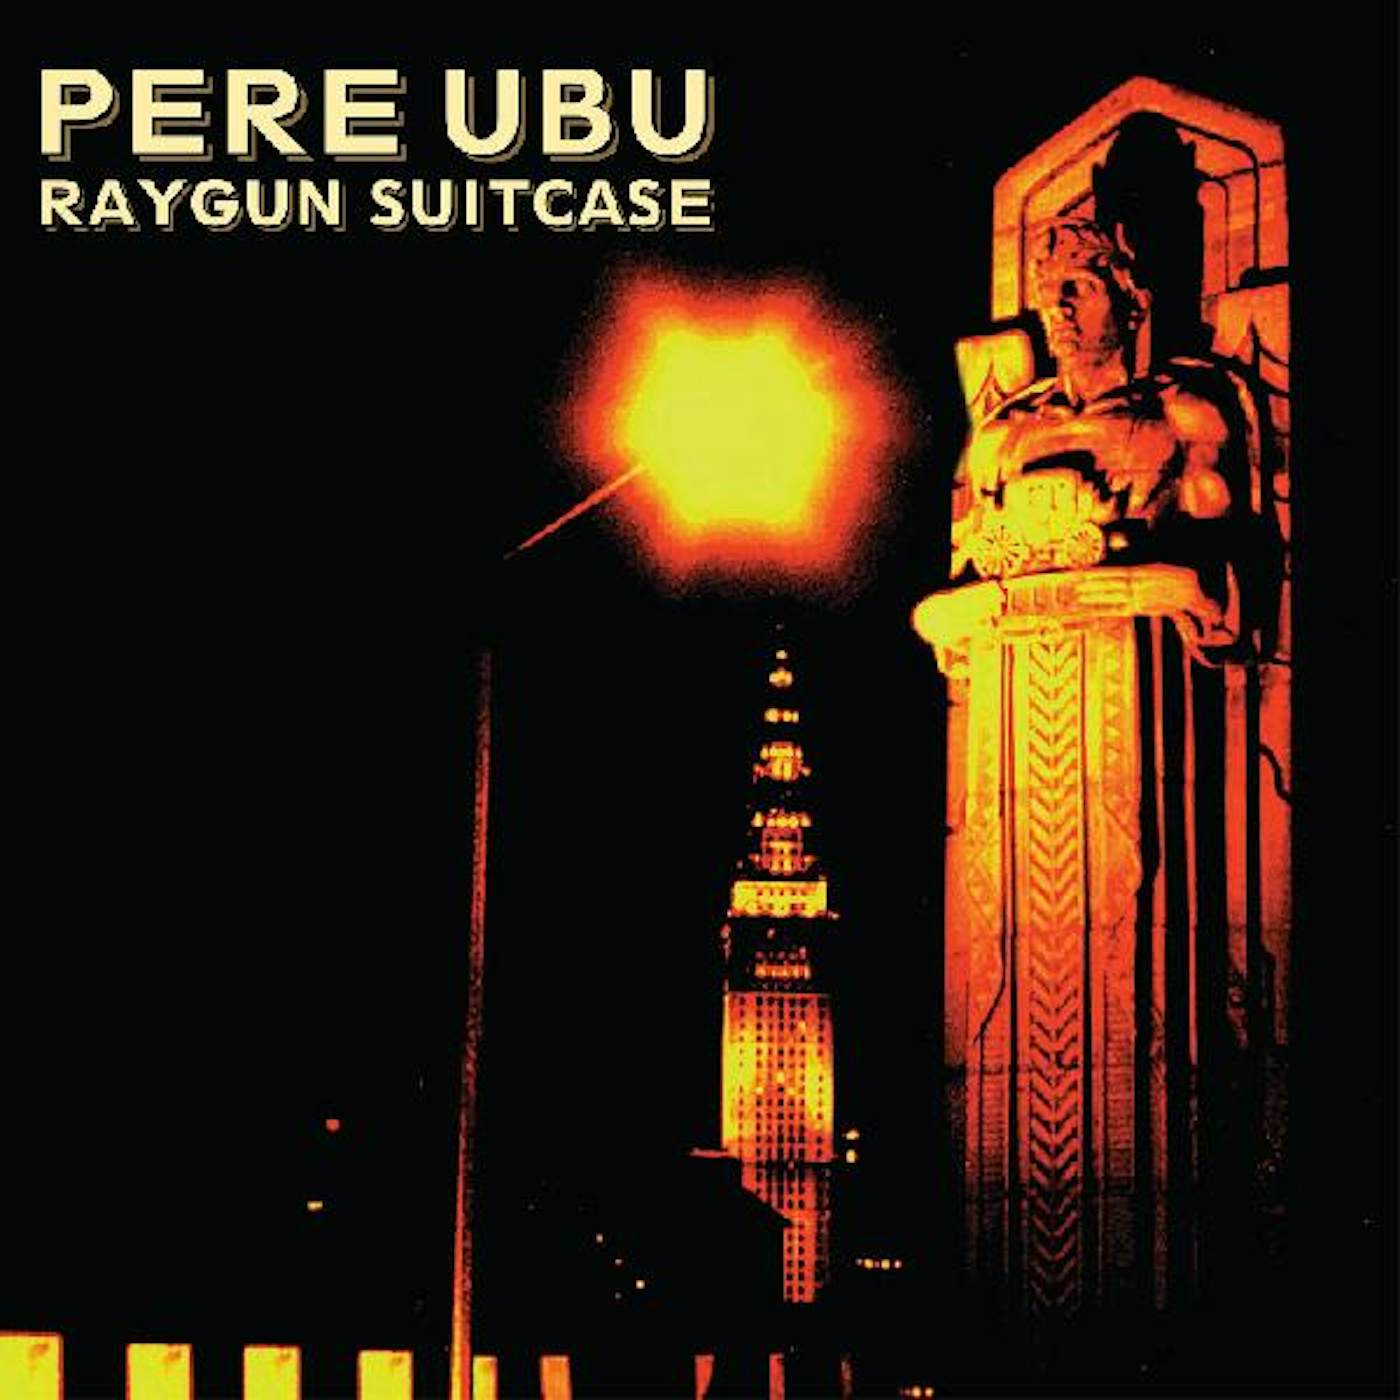 Pere Ubu RAYGUN SUITCASE CD